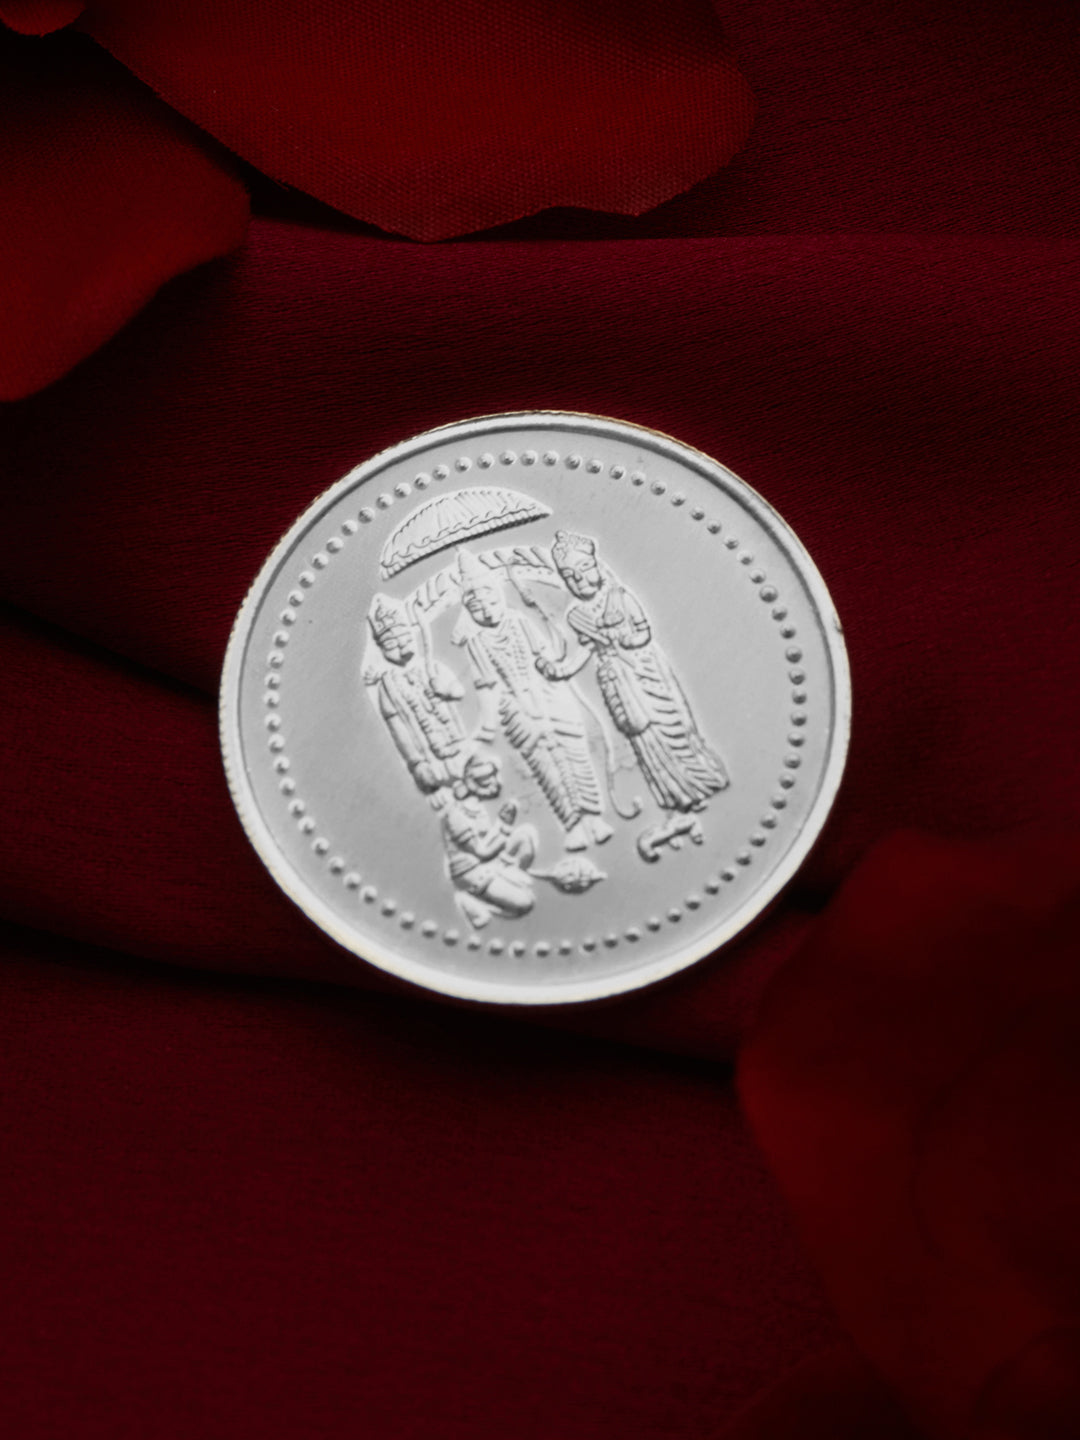 10 Gram 999 purity Silver Coin of Shri Ram Darbar